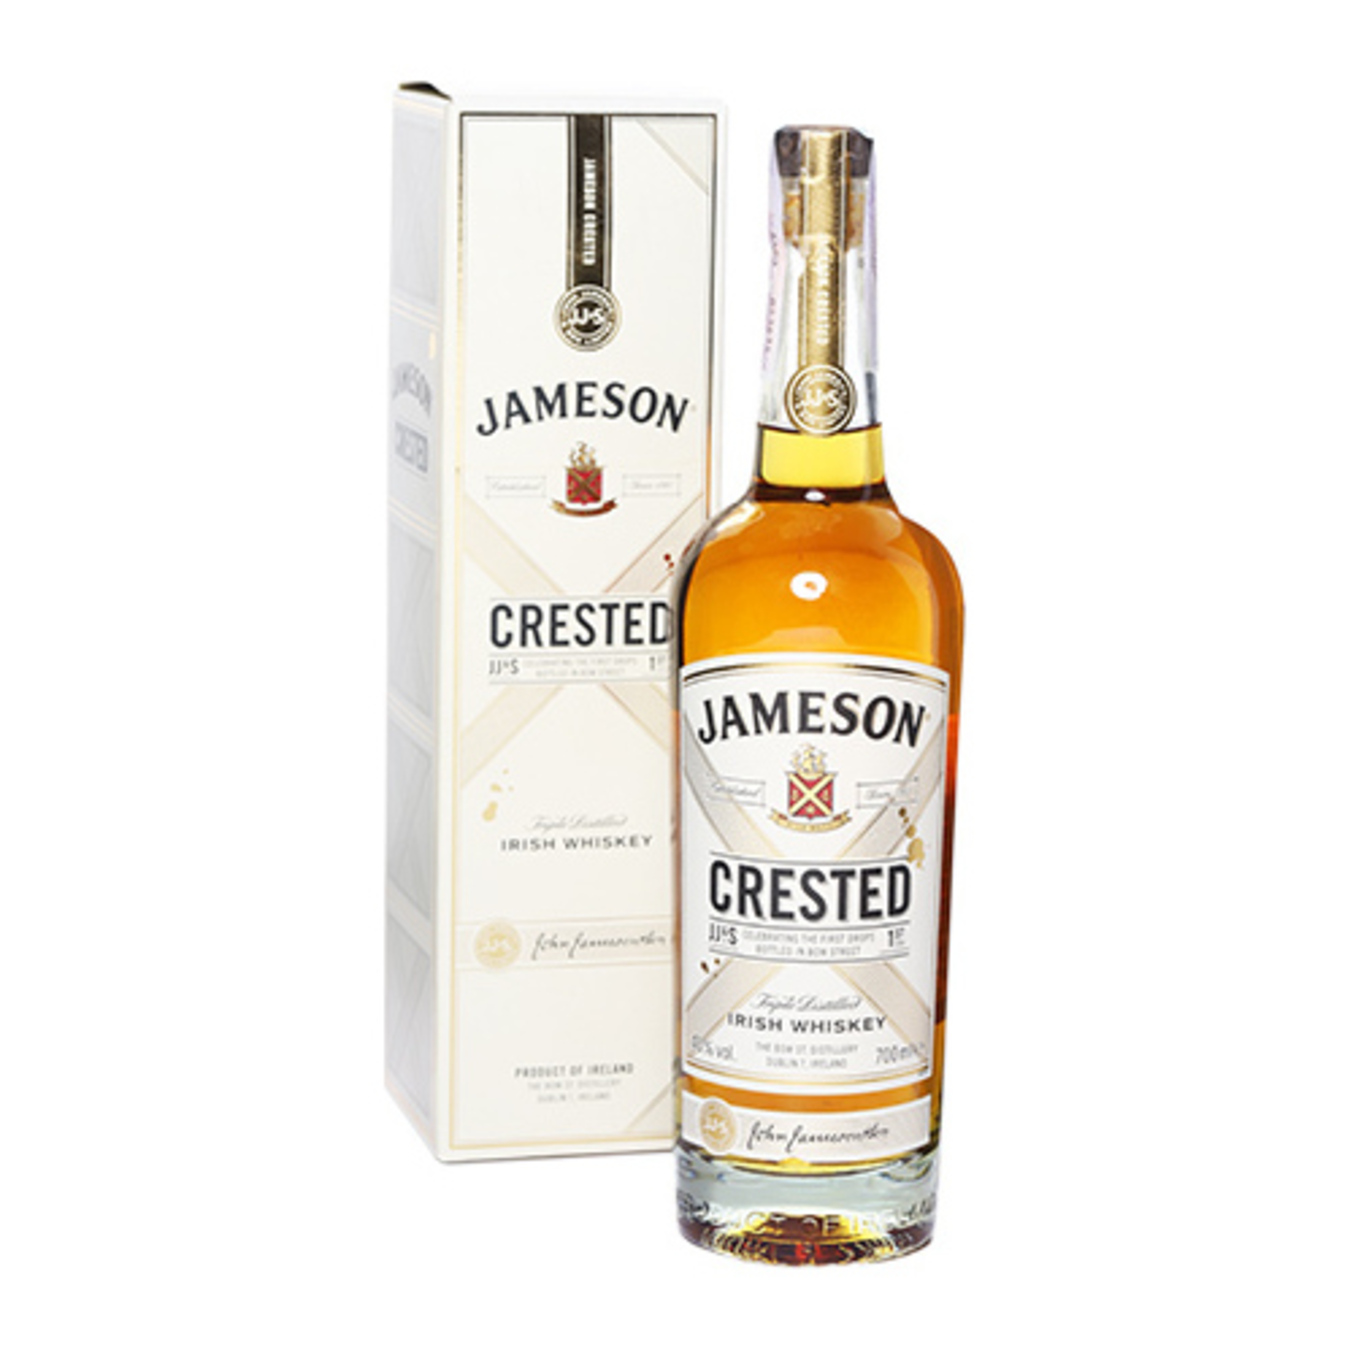 Jameson Crested Whiskey 700ml gift box